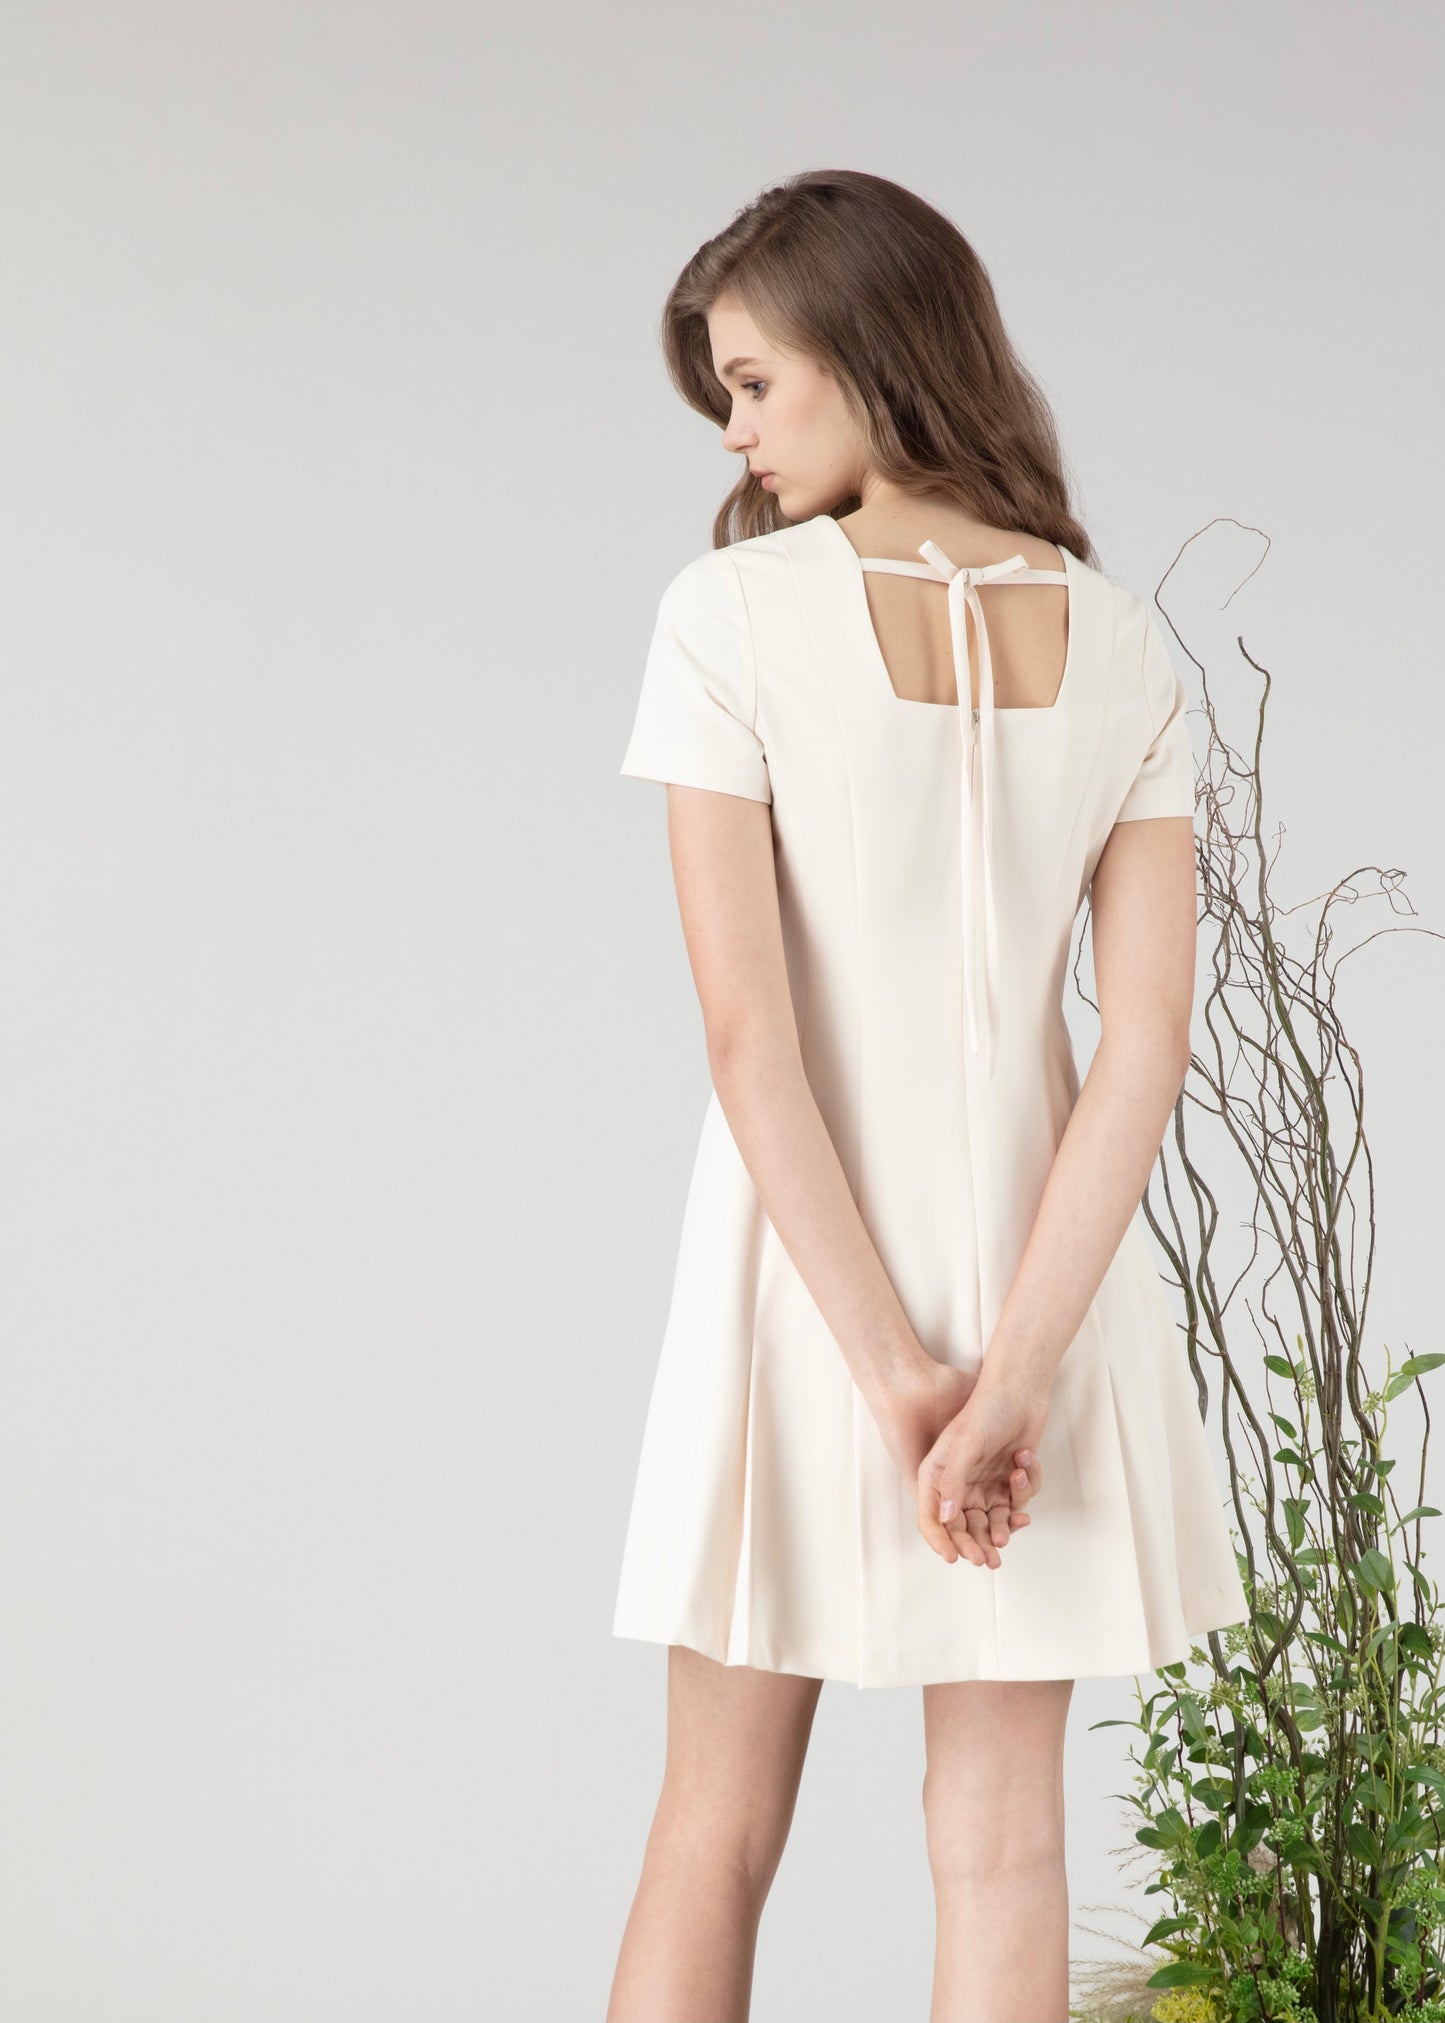 Creamy white mini dress